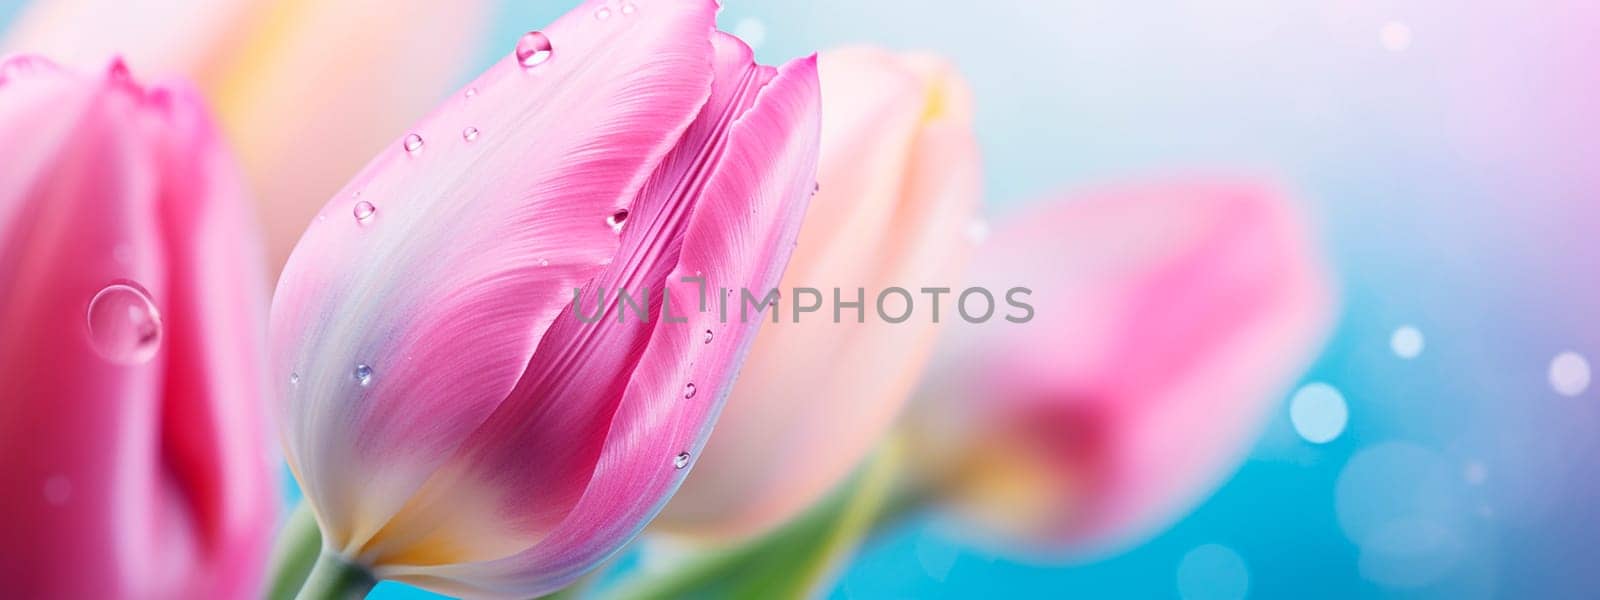 Beautiful tulips in pastel colors. Selective focus. by yanadjana